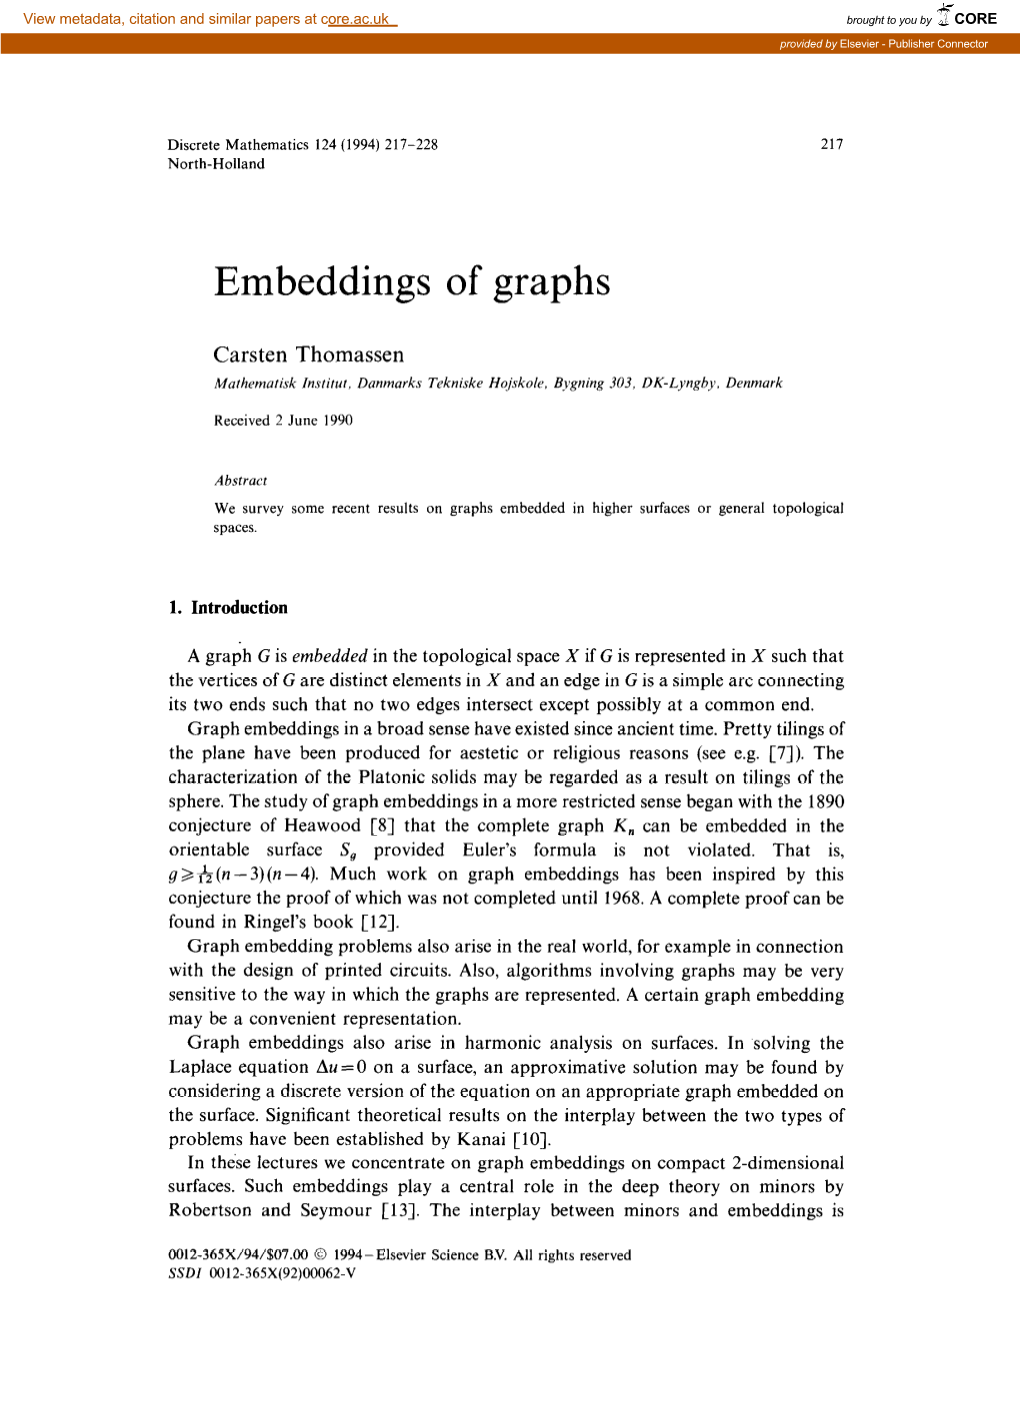 Embeddings of Graphs